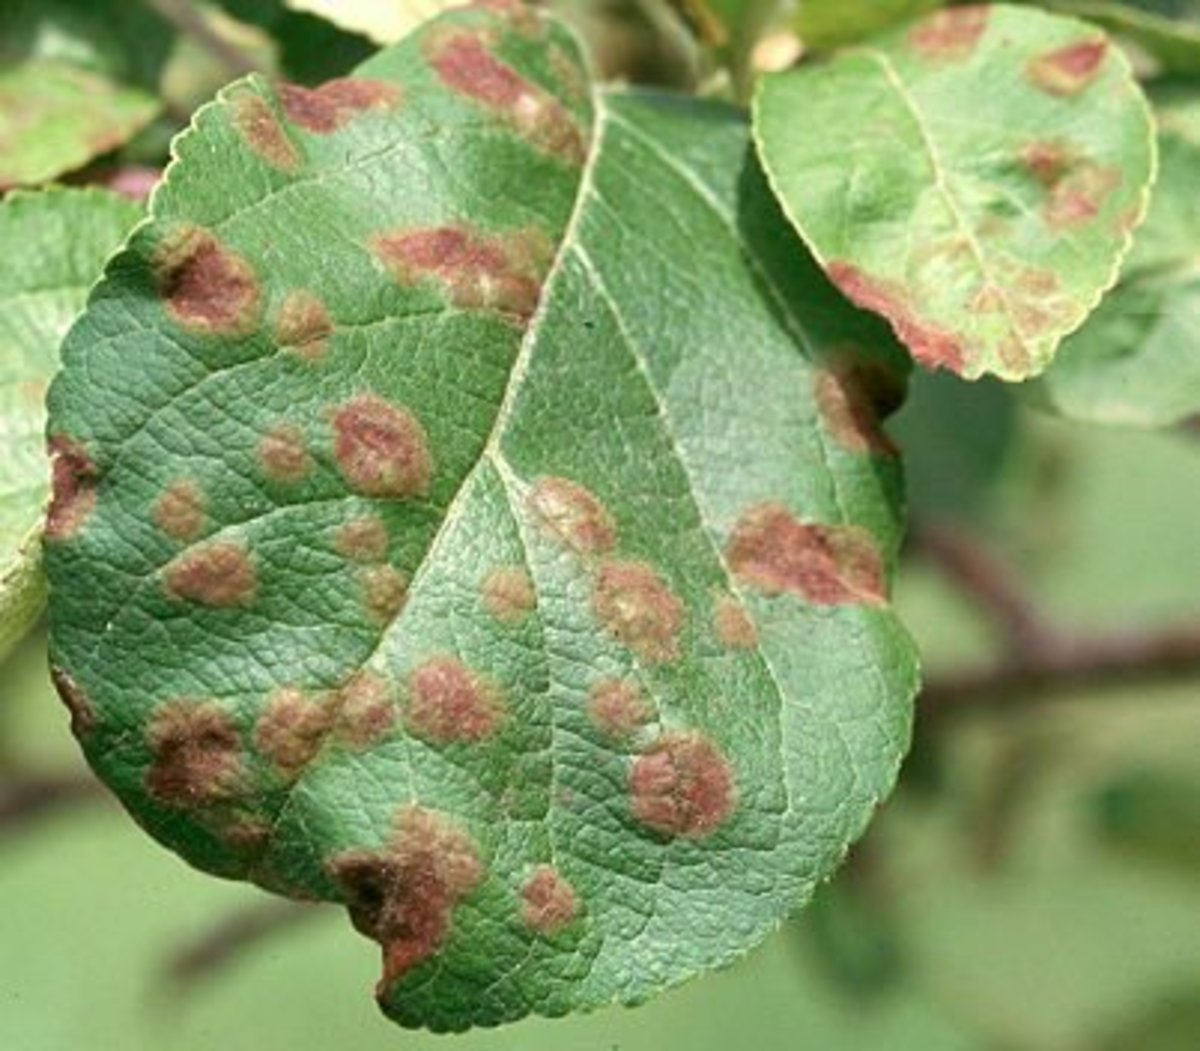 Apple scab disease on leaves.